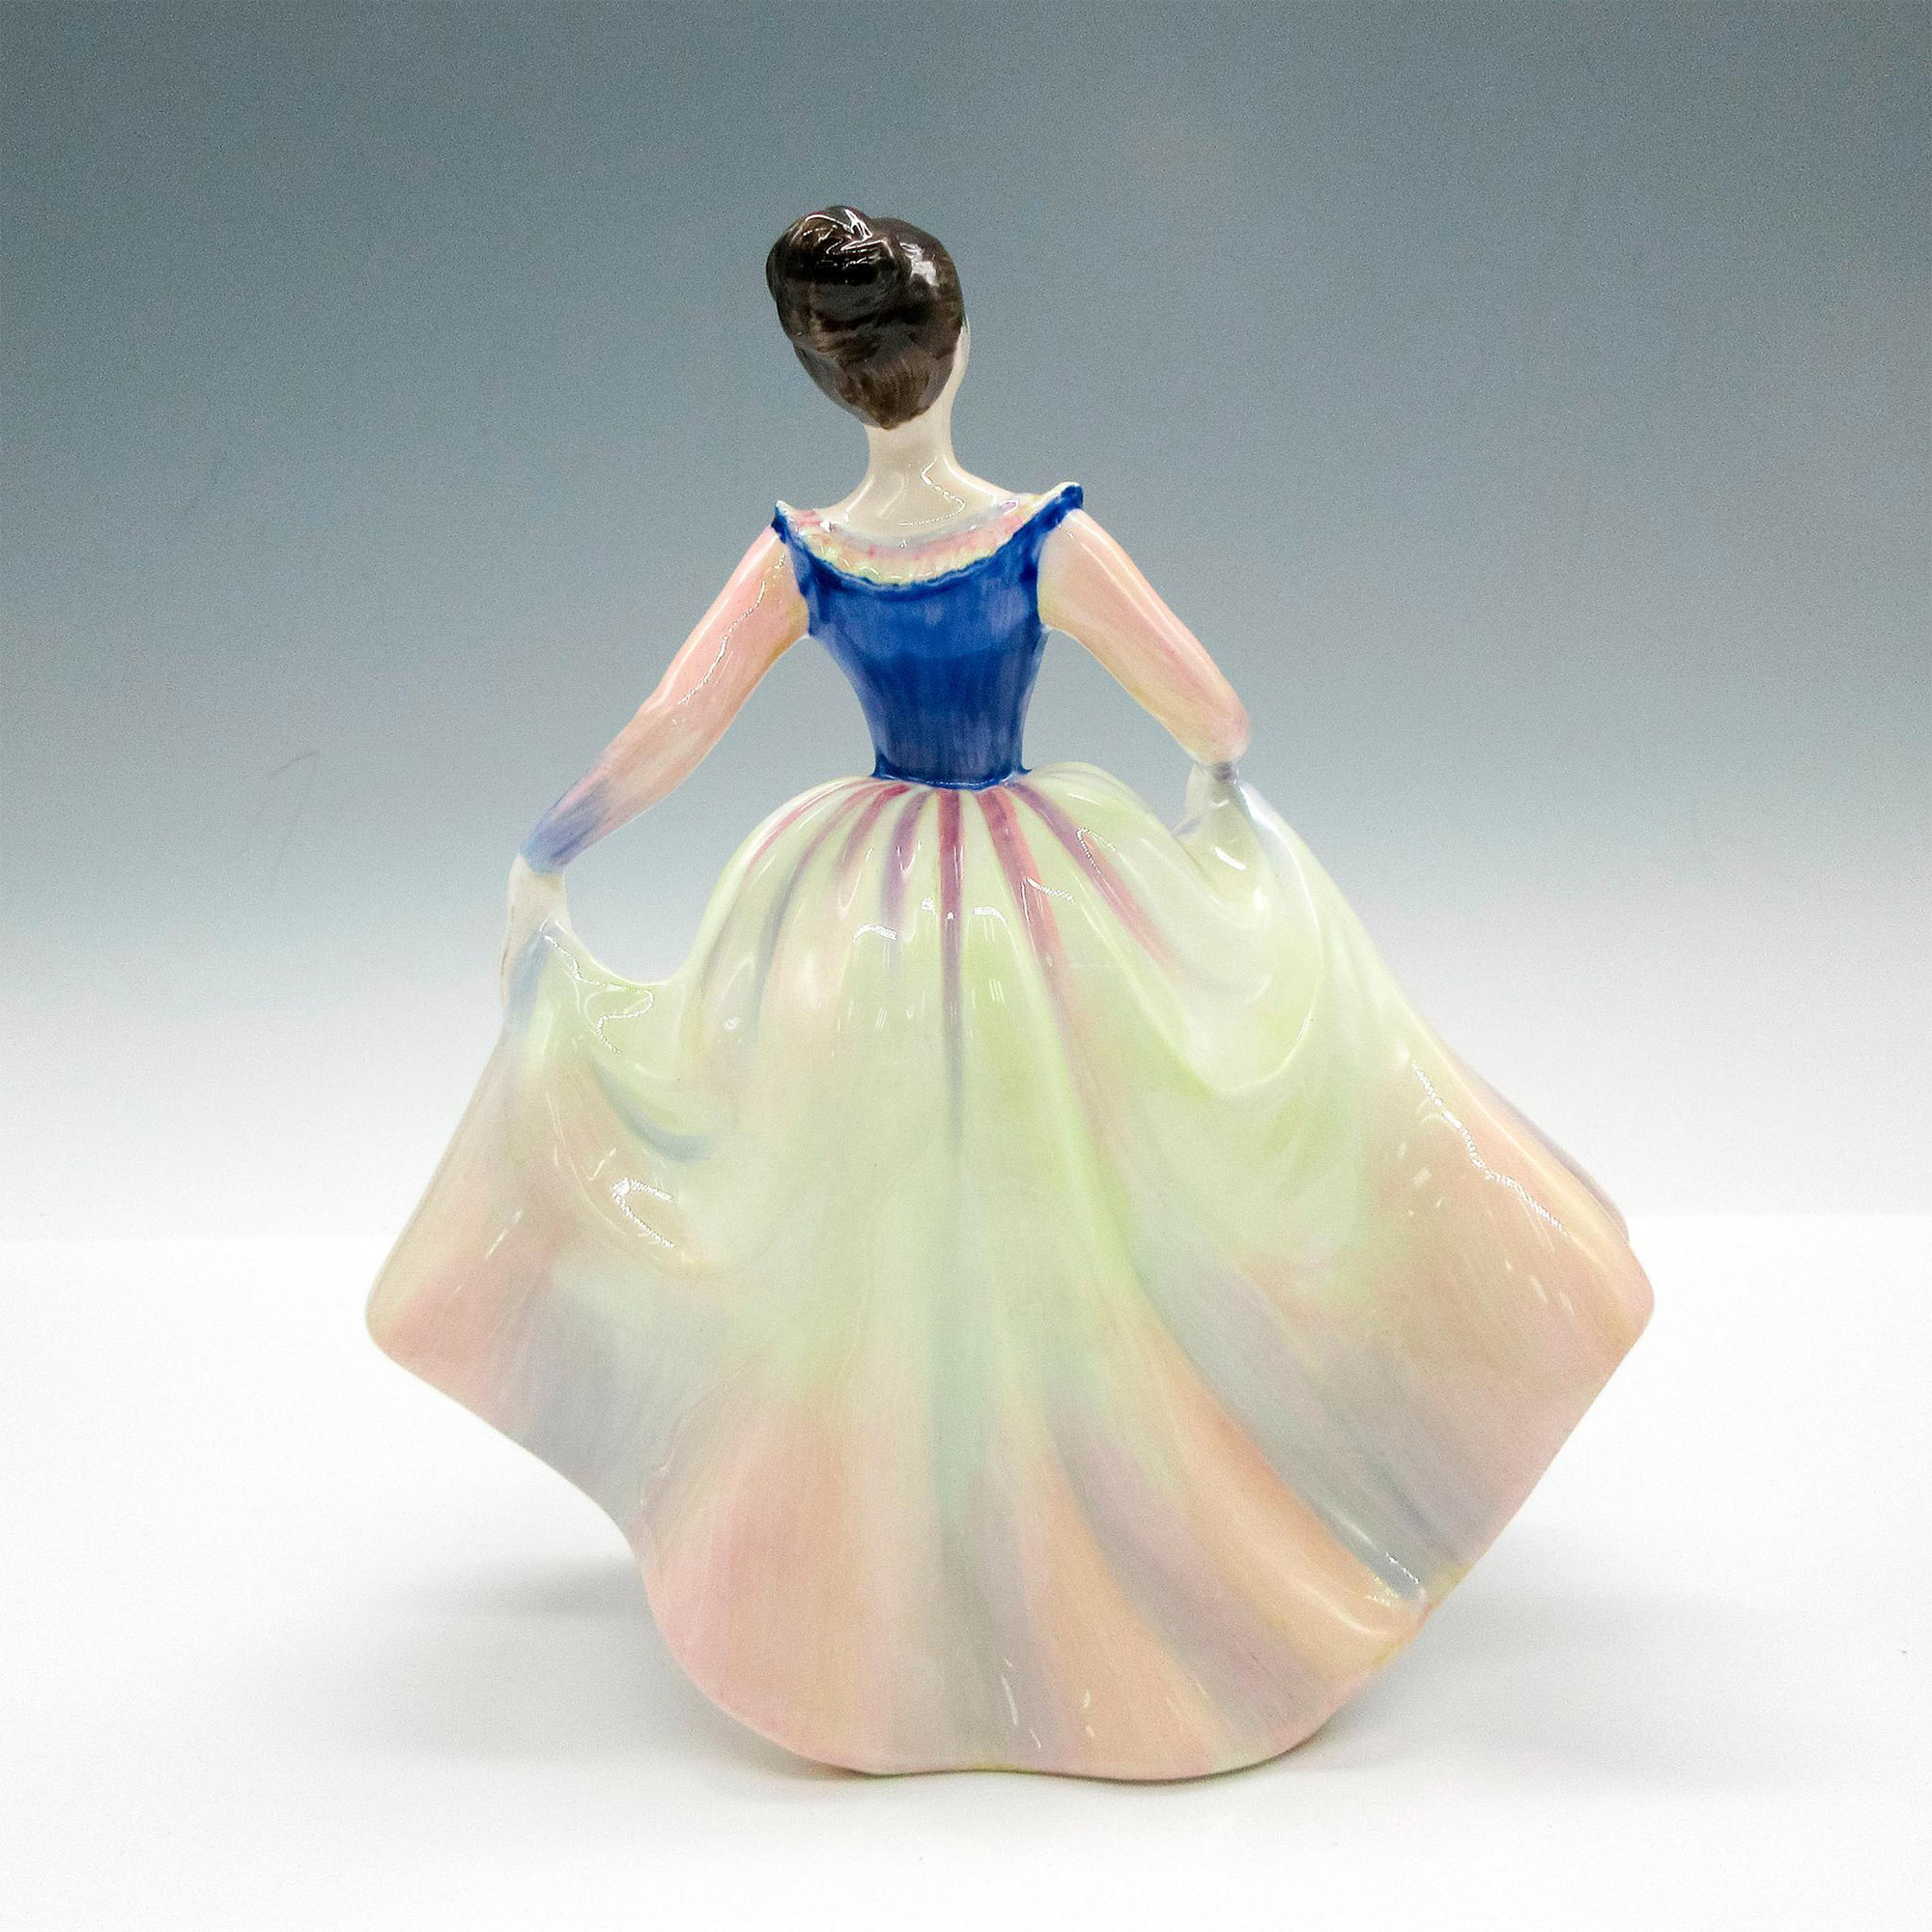 Lisa HN2394 - Royal Doulton Figurine - Image 2 of 3